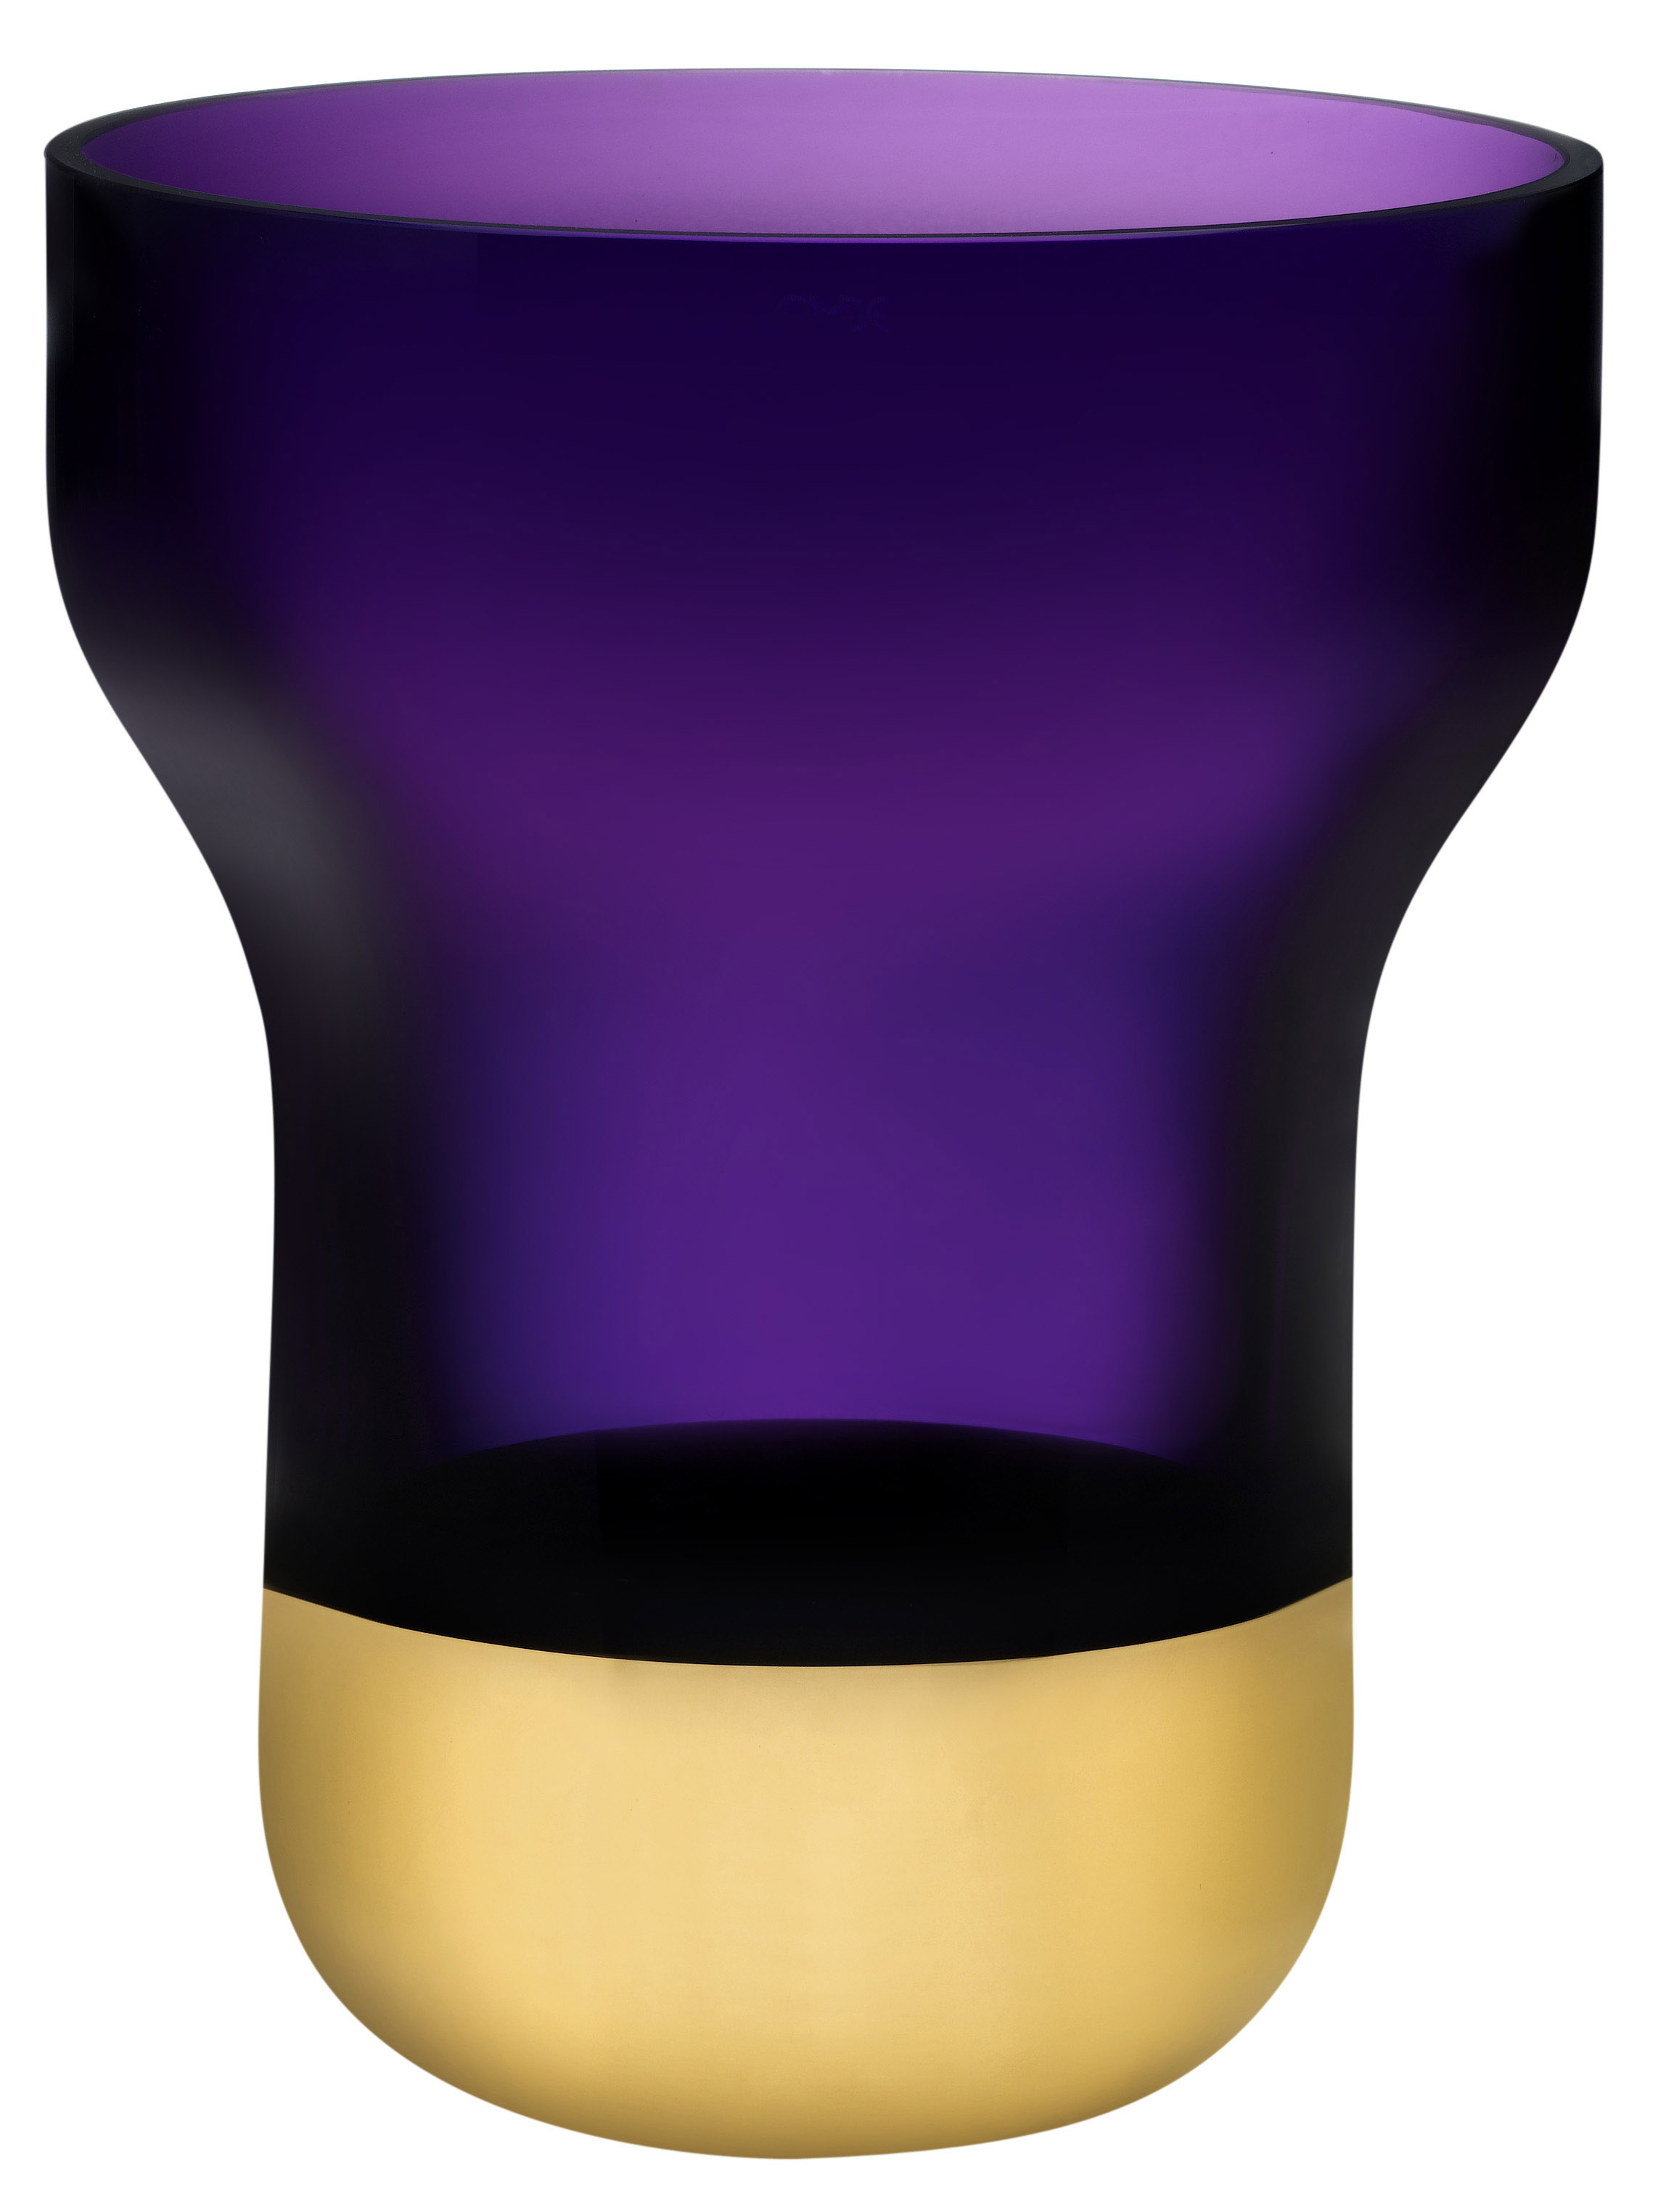 Nude Design Contour Vase Purple and Gold Bottom